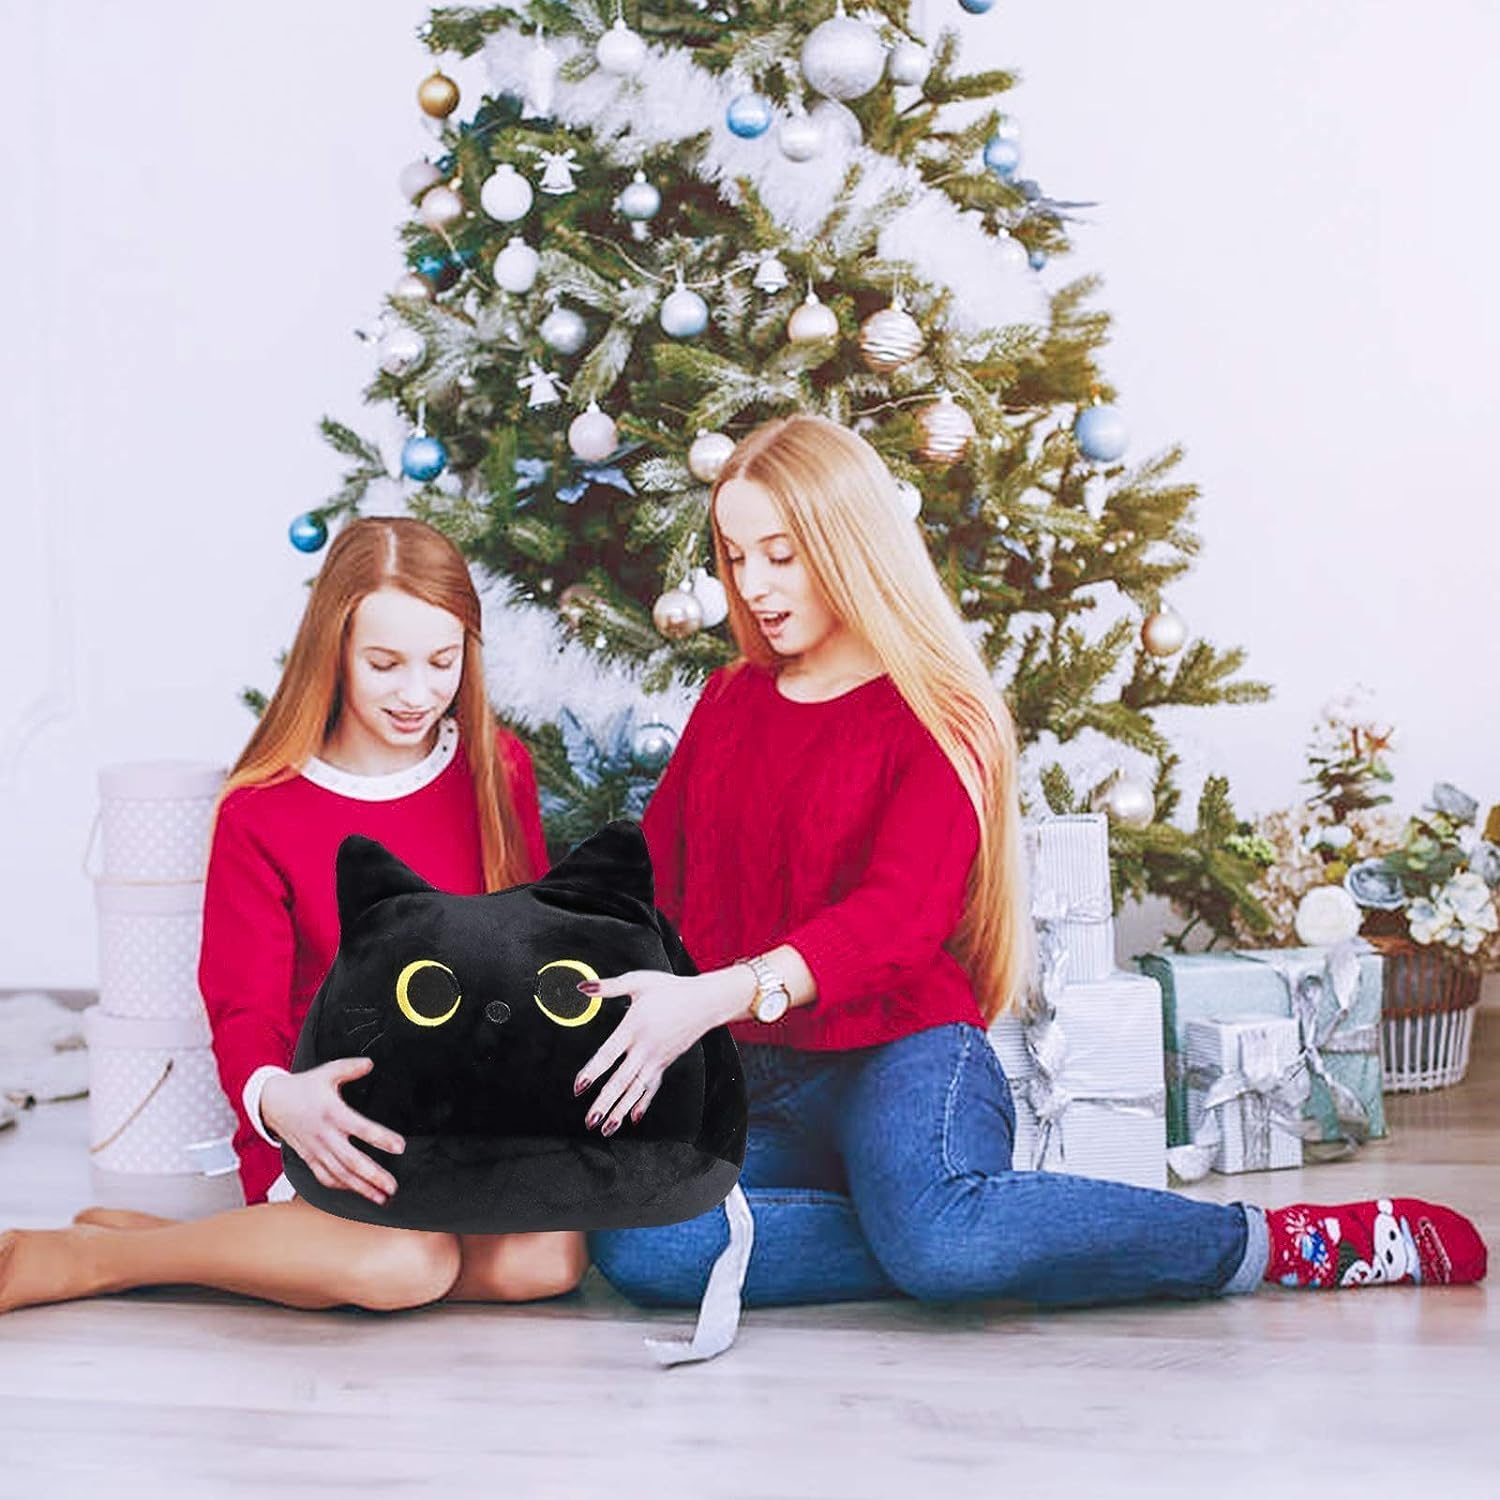 Black Cat Plush Toy, Tazweeq Cat Plush Toy Pillow, Creative Cat Shape Pillow, Cute Cat Plush Toy Gift for Girl Boy Girlfriend (Black 15.7")